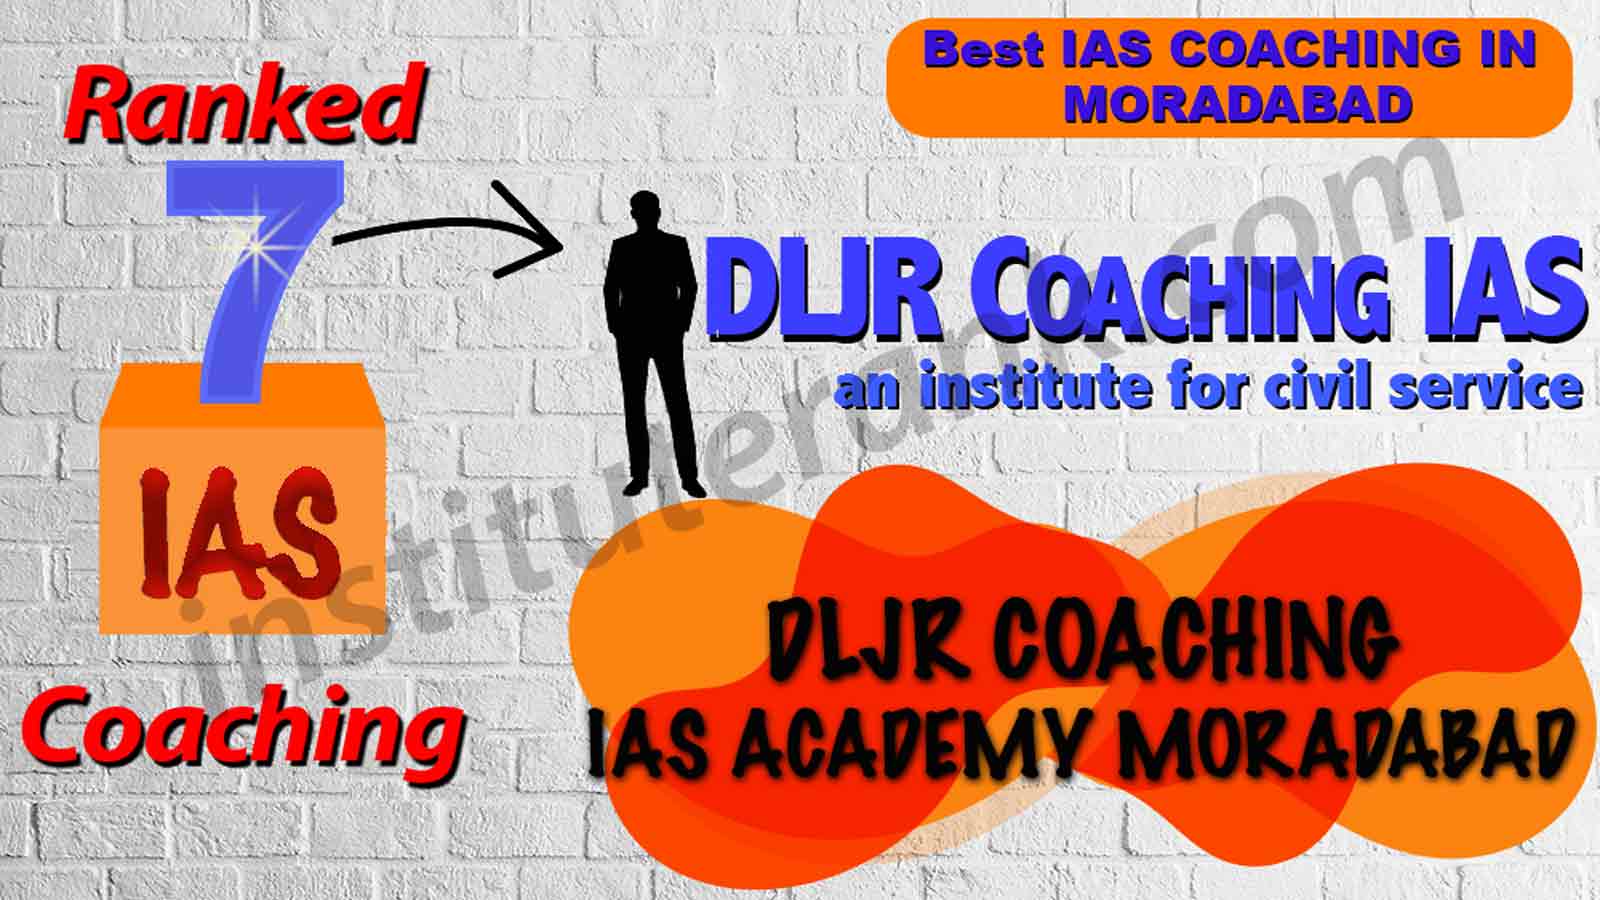 Best IAS Coaching in Moradabad